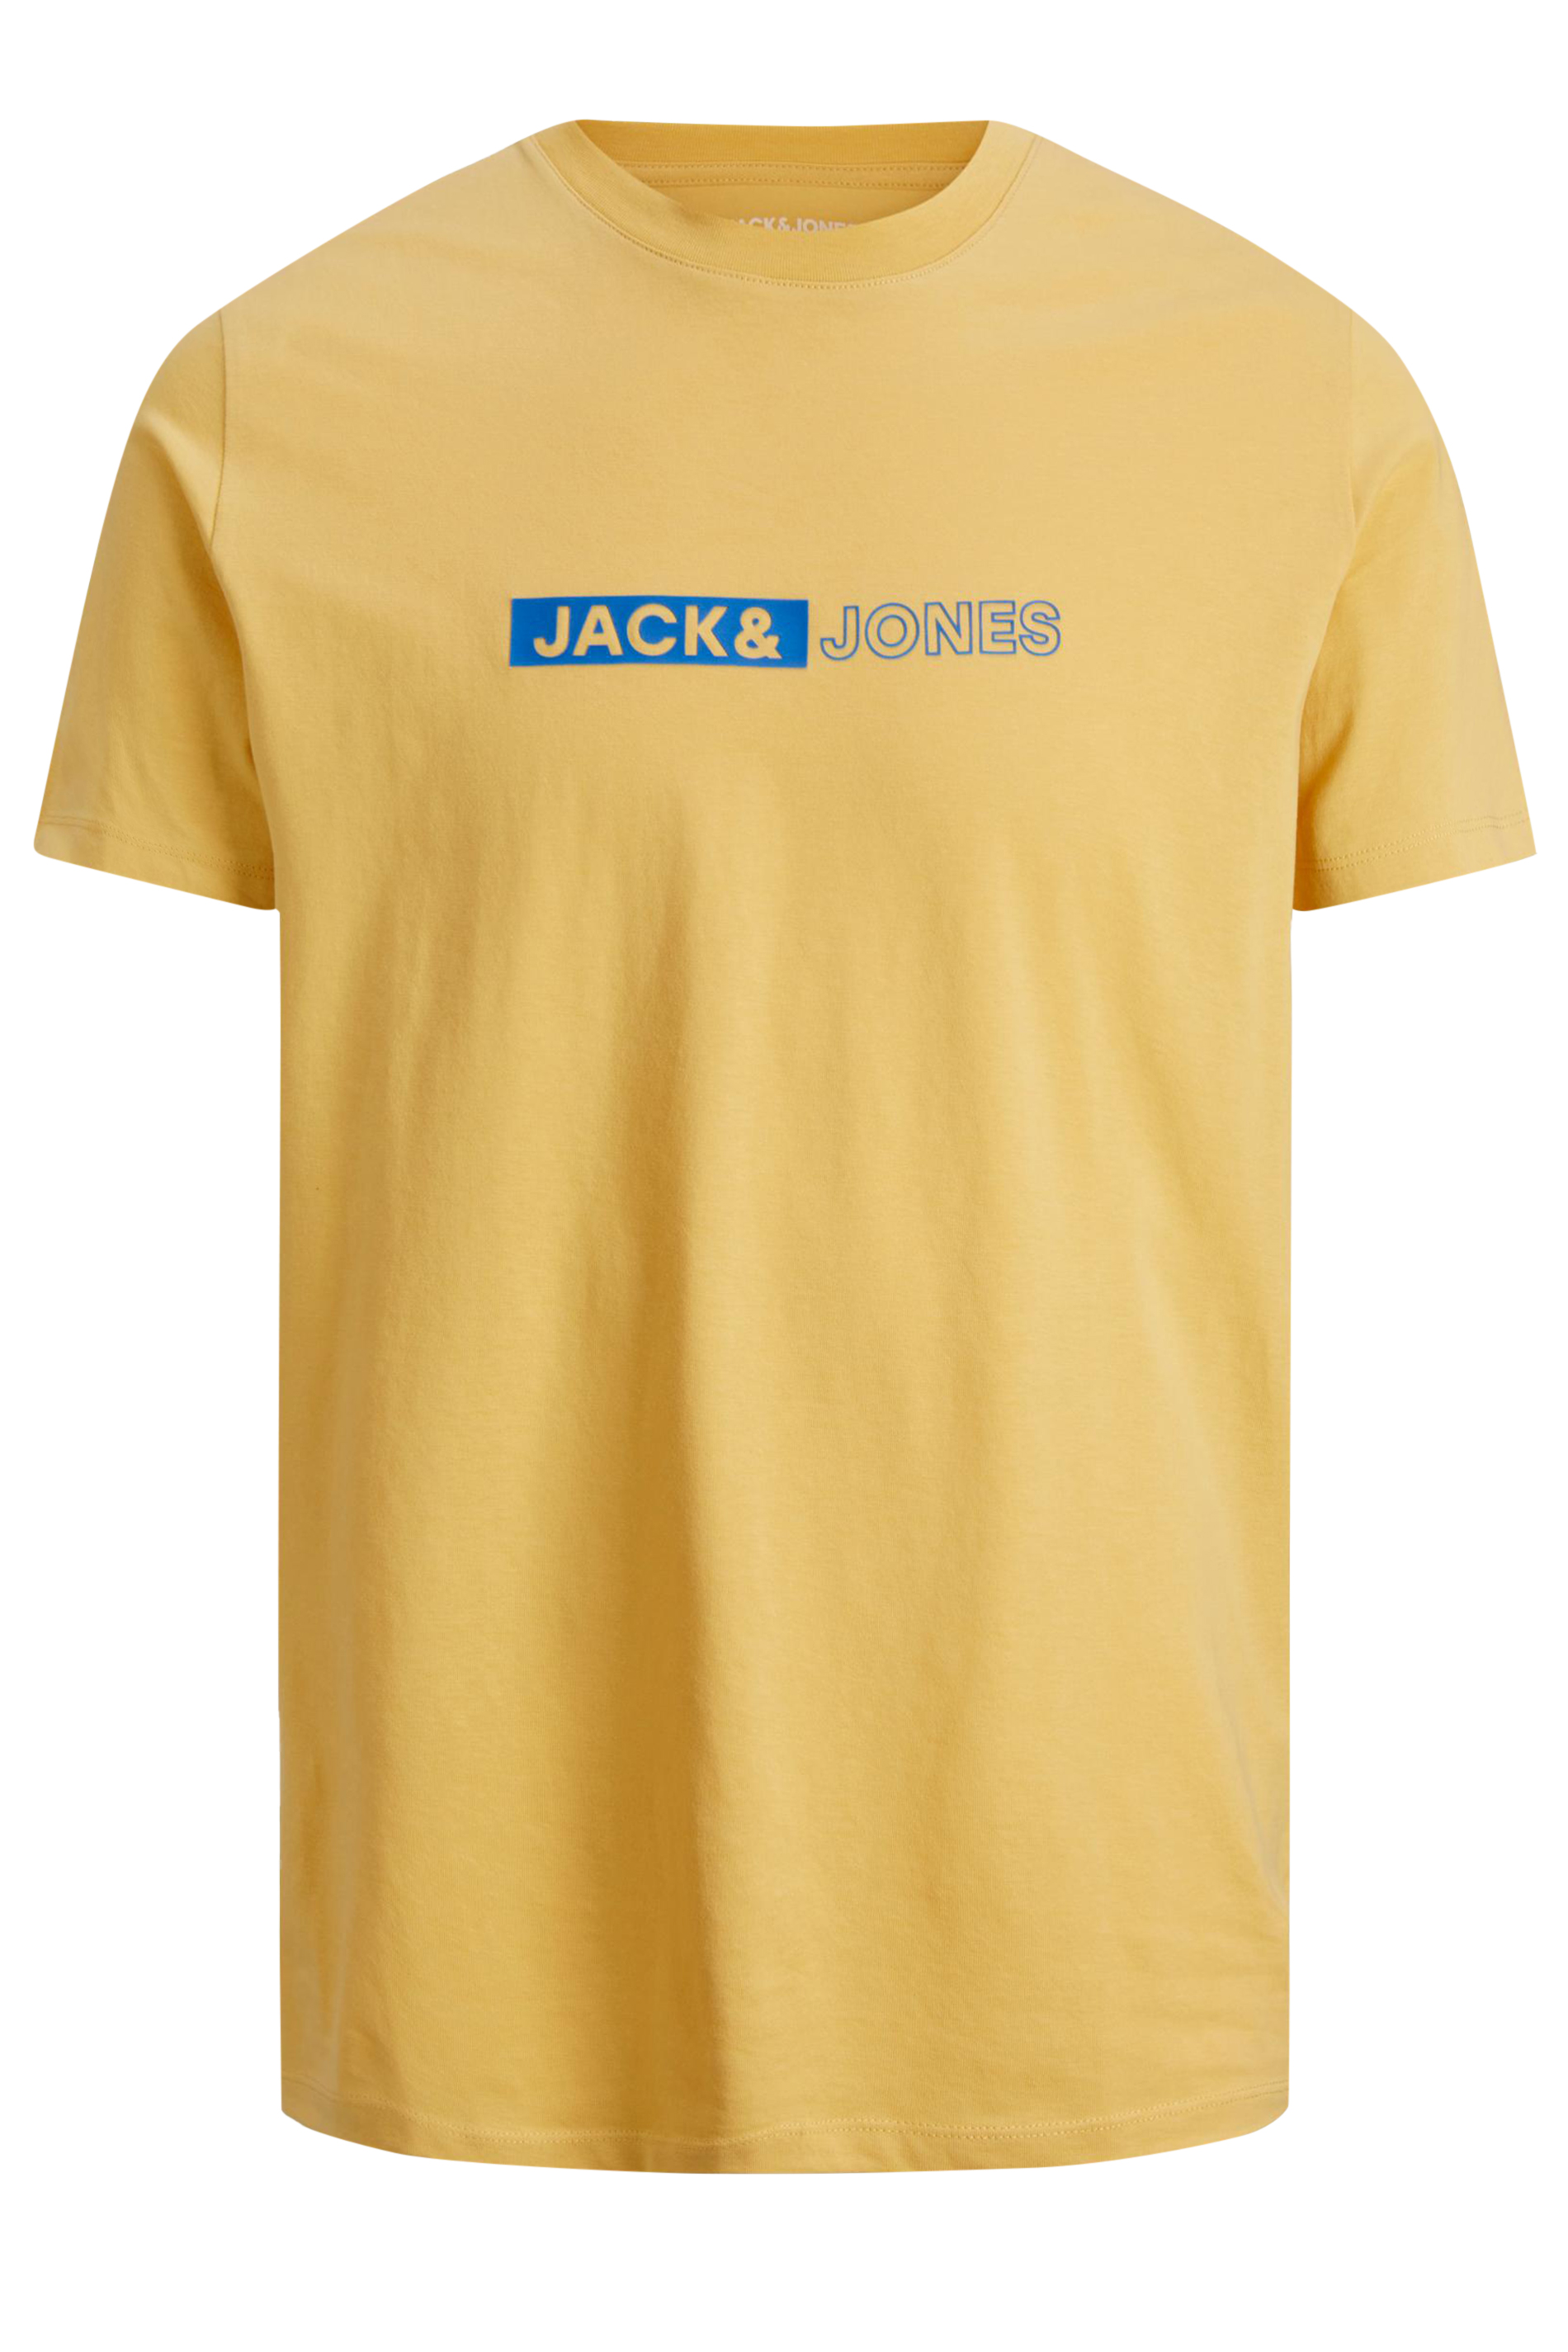 JACK & JONES Big & Tall Mens Yellow Logo T-Shirt | BadRhino